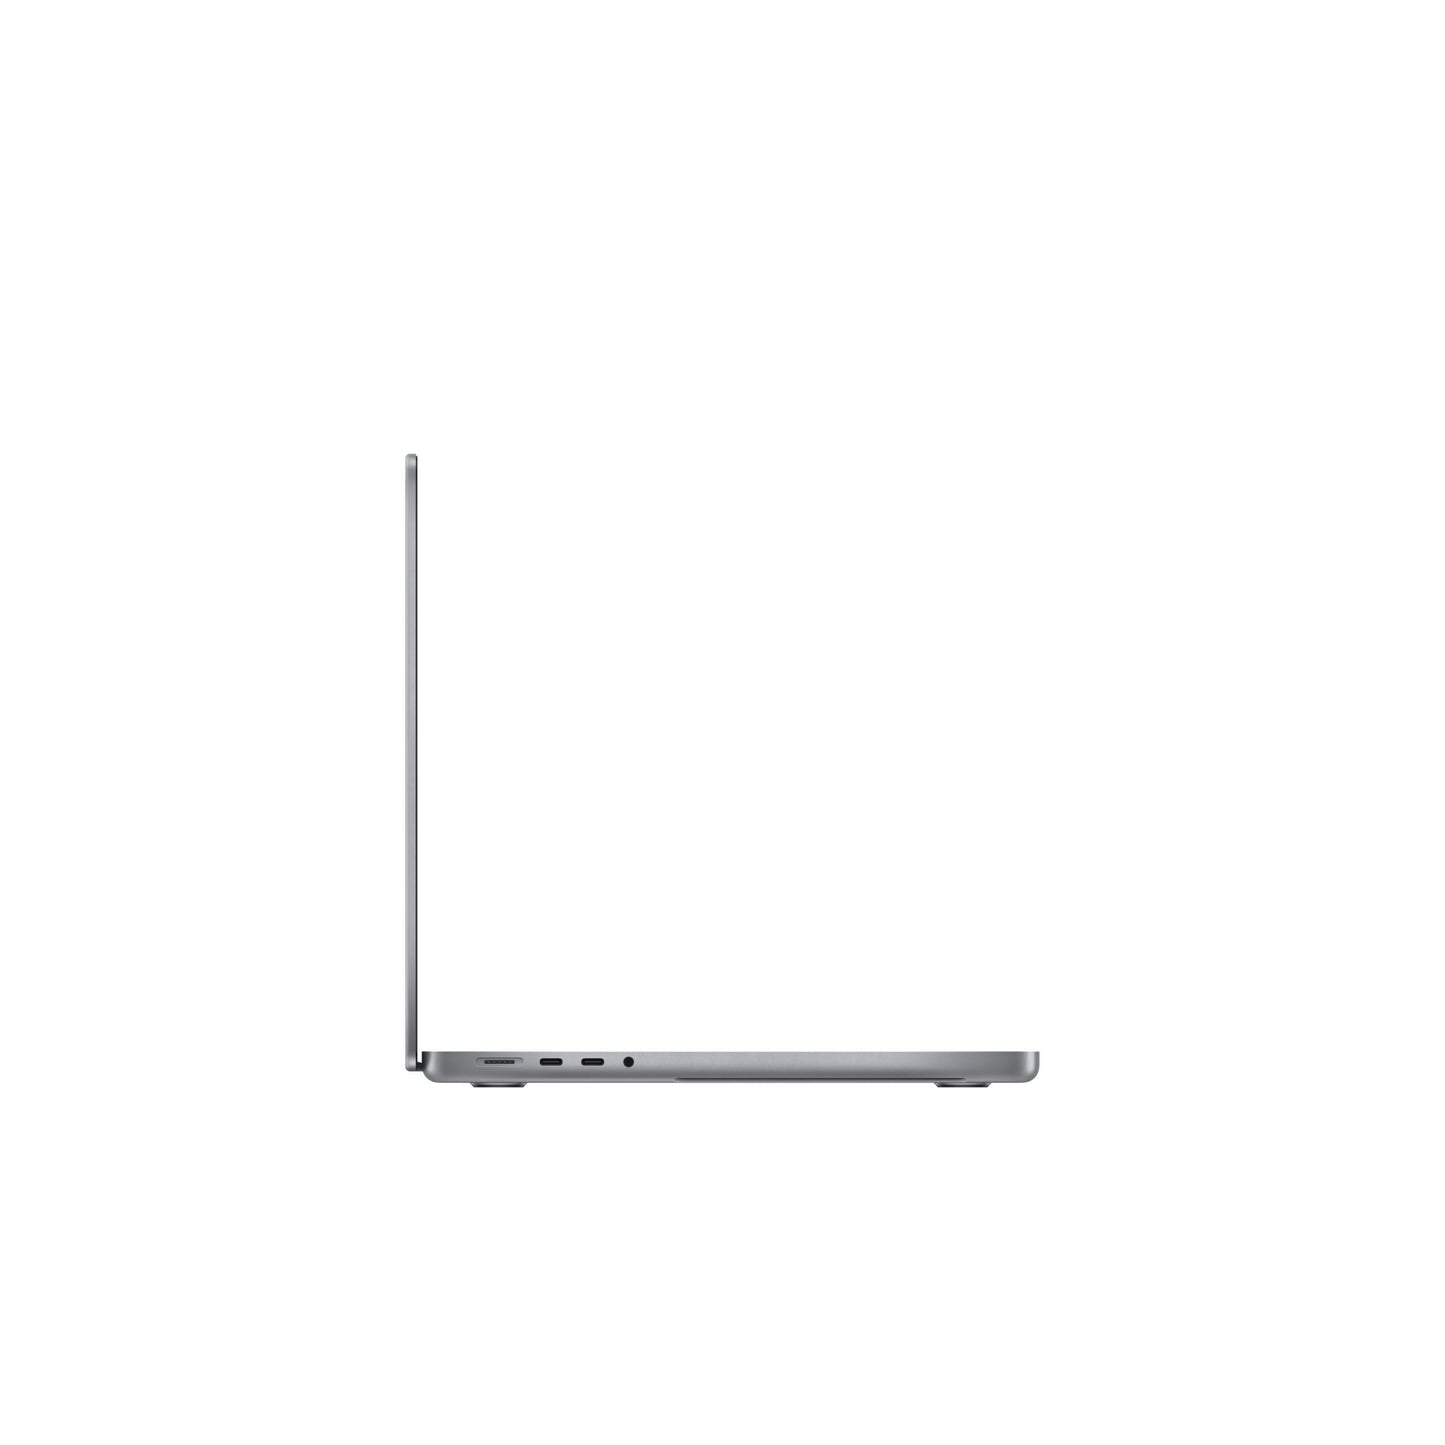 MacBook Pro 14-inch M1 Pro ماك بوك برو ابل